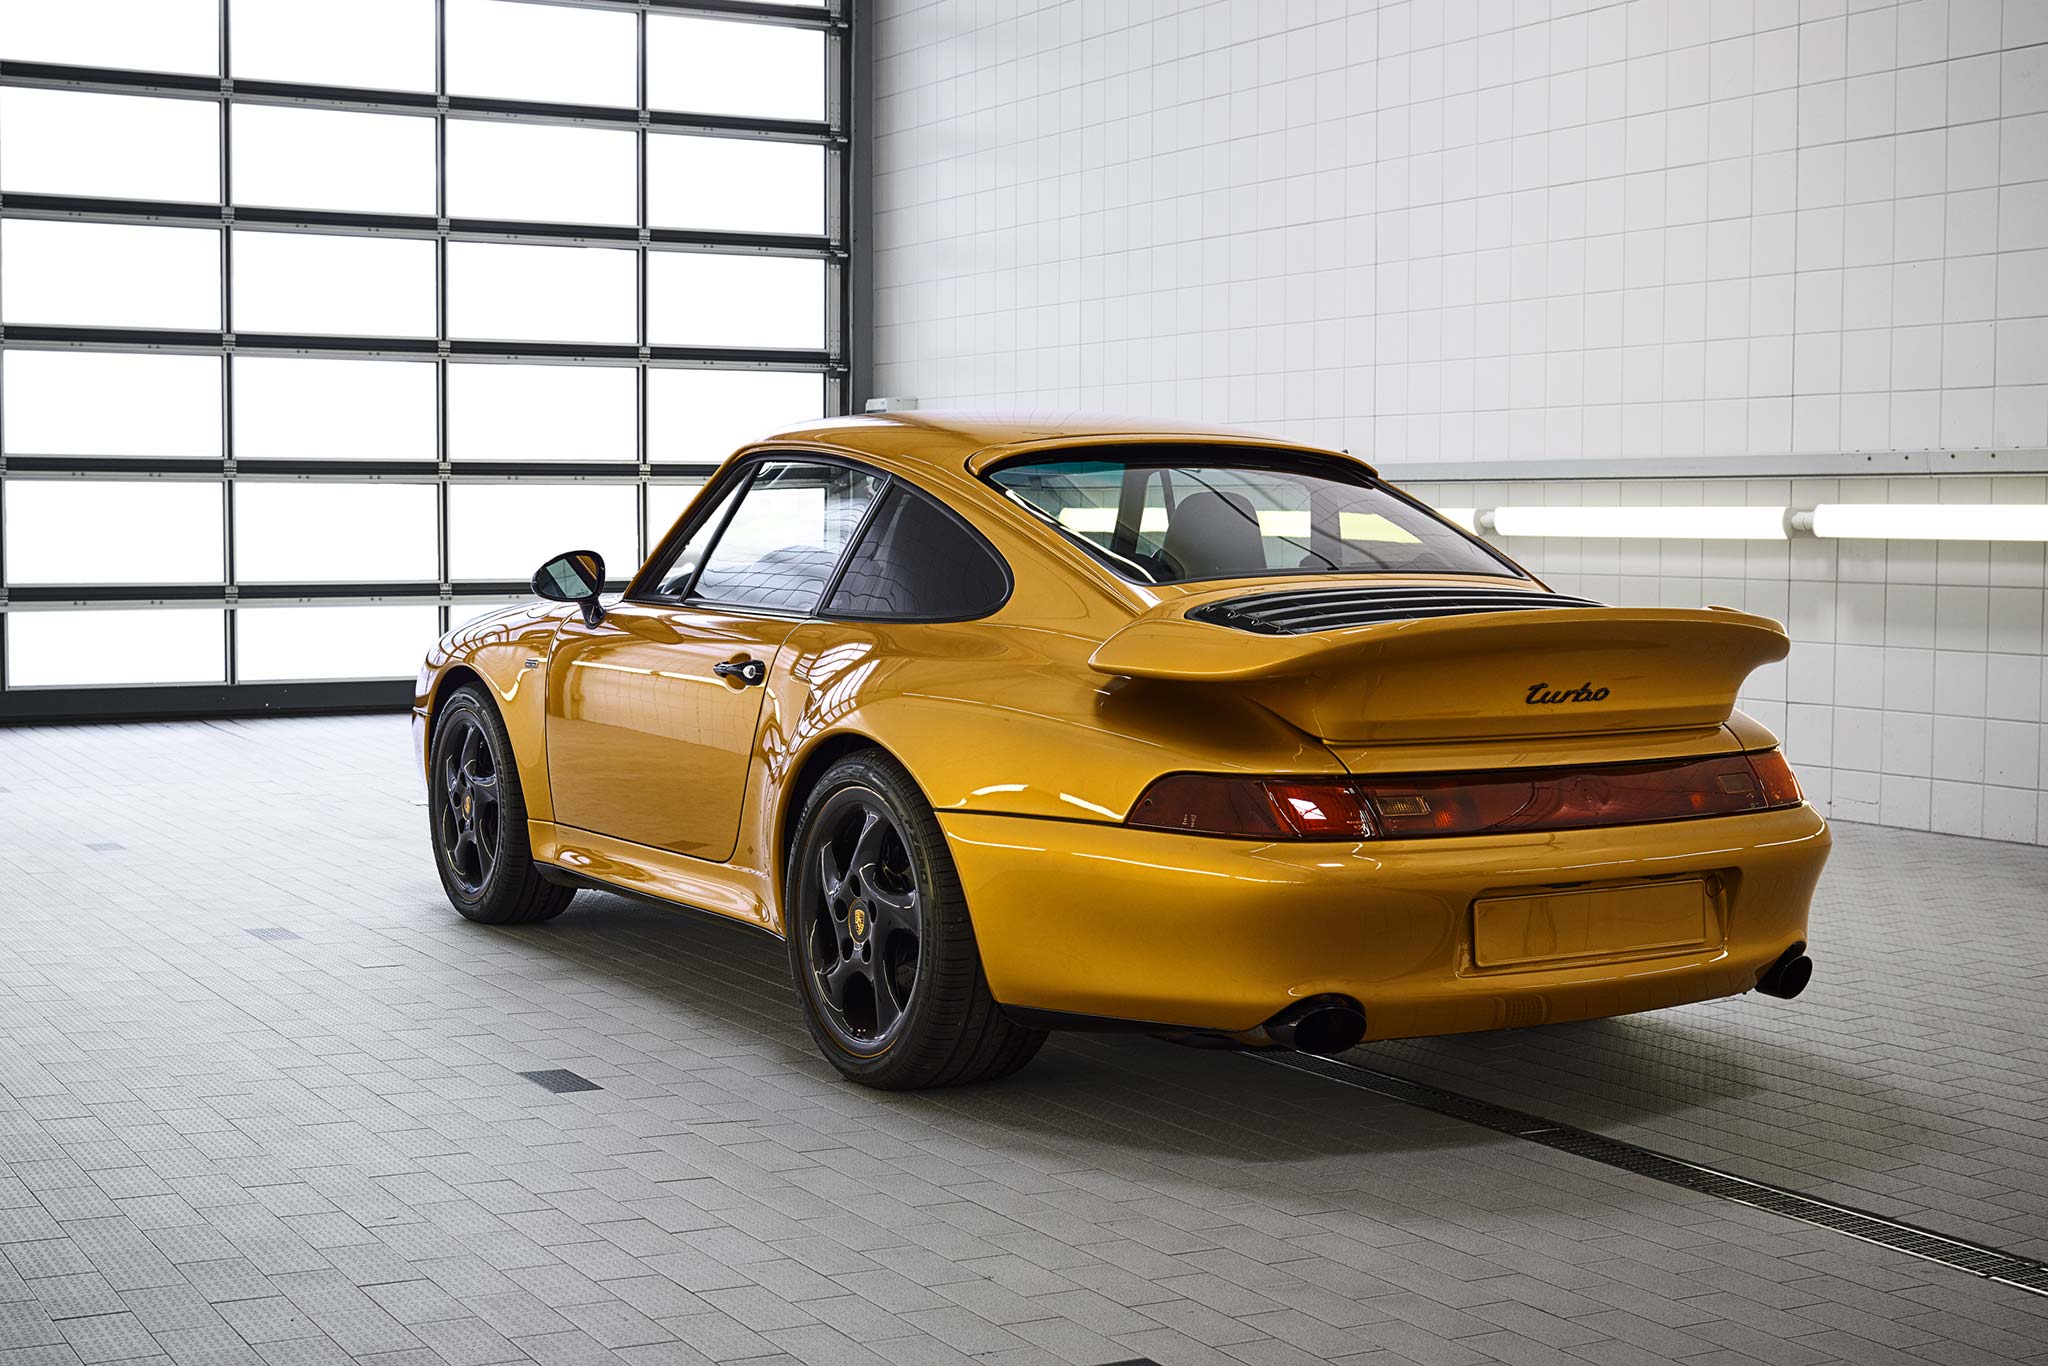 Porsche_Classic_911_turbo_993_tinhte_1.jpg